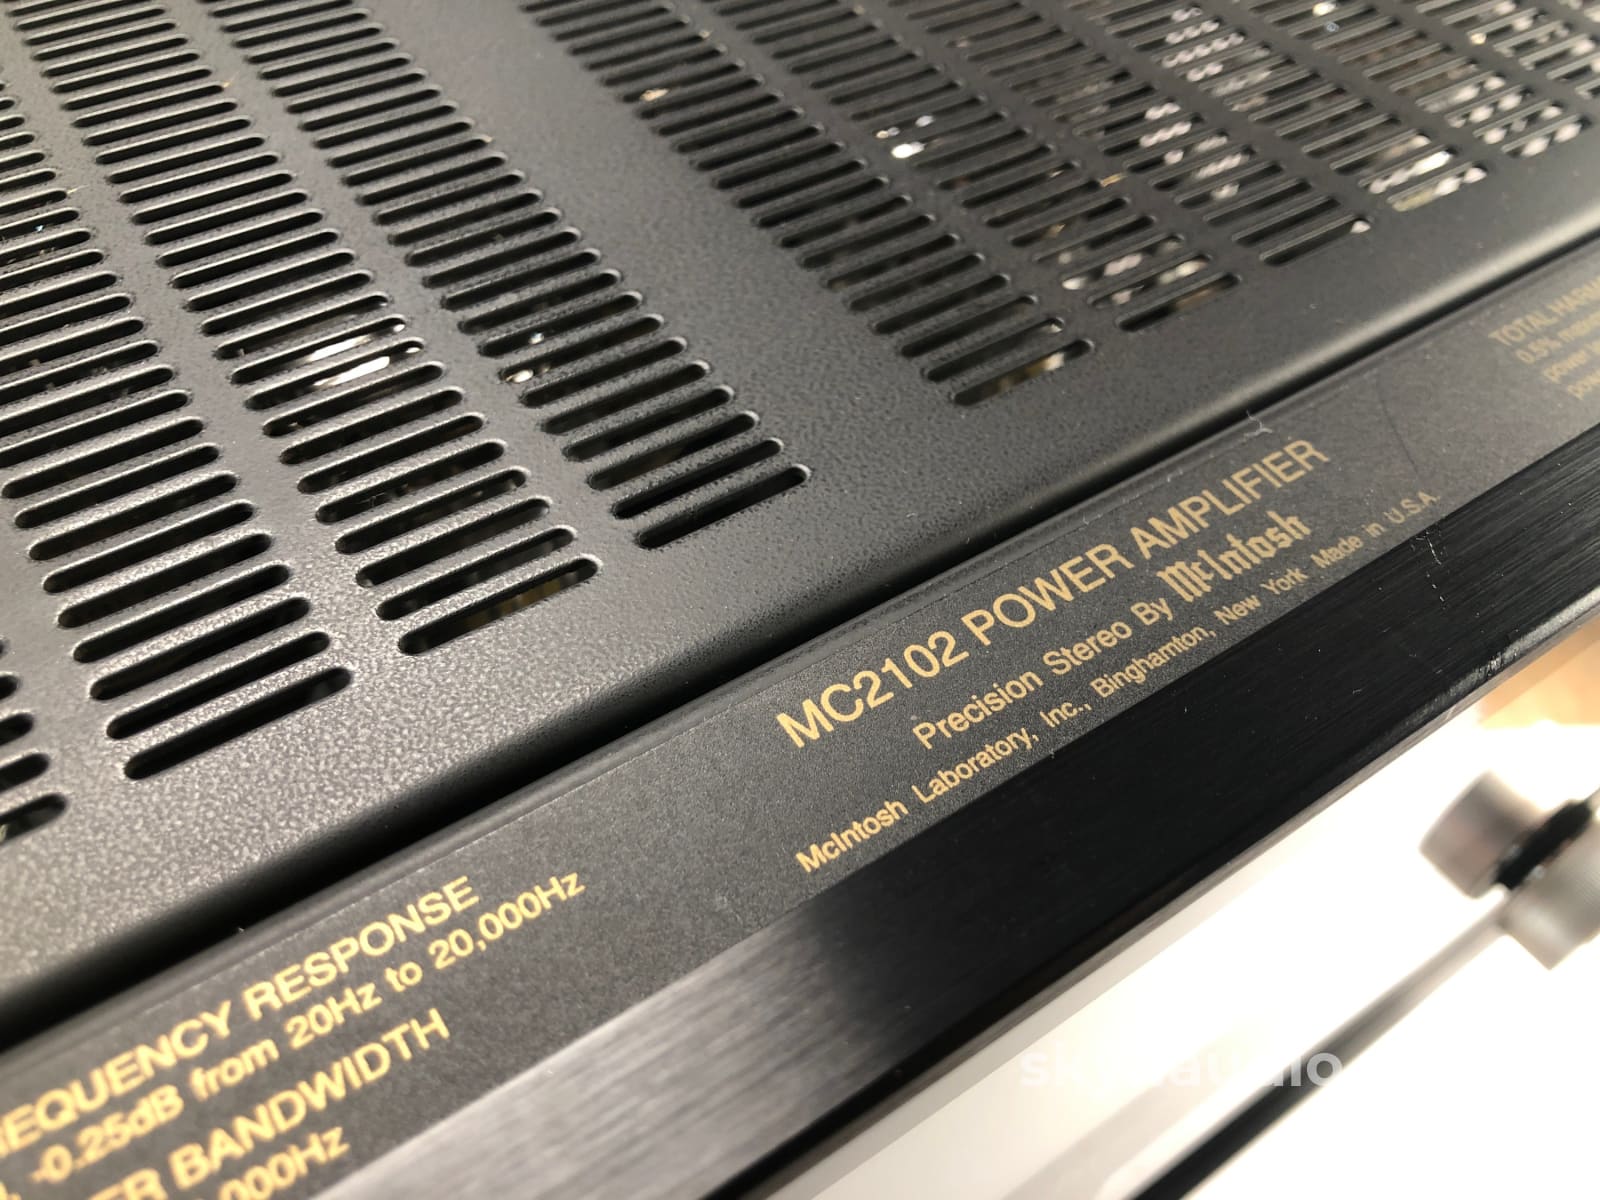 Mcintosh Mc2102 Tube Amplifier - Almost Vintage Sidney A. Corderman 50Th Anniversary